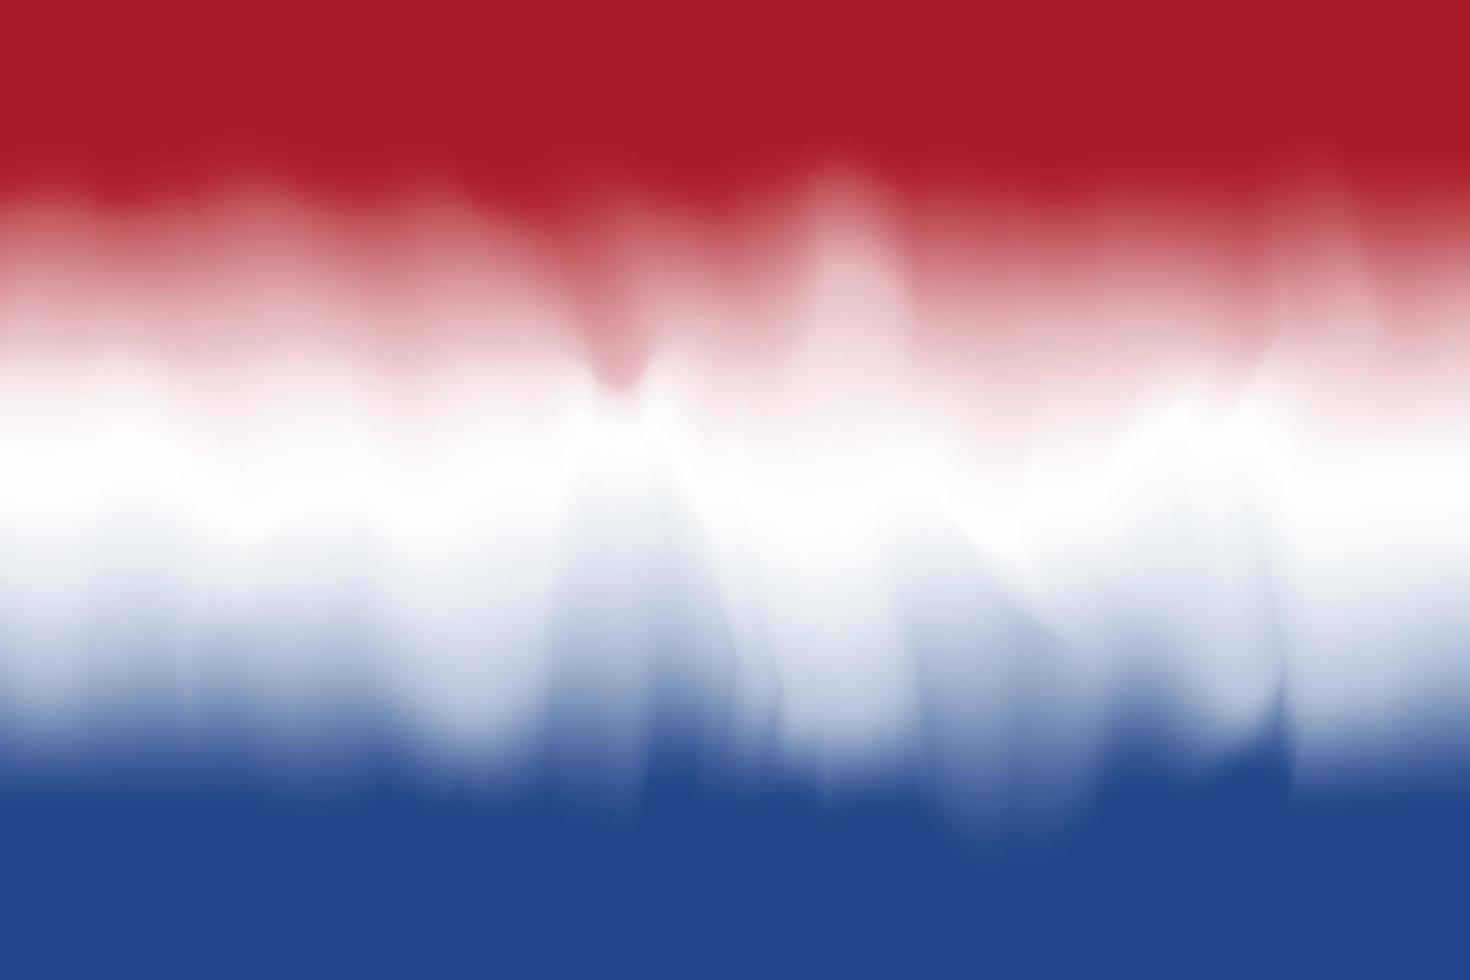 niederländische Flaggenvektorillustration im abstrakten modernen Stil vektor